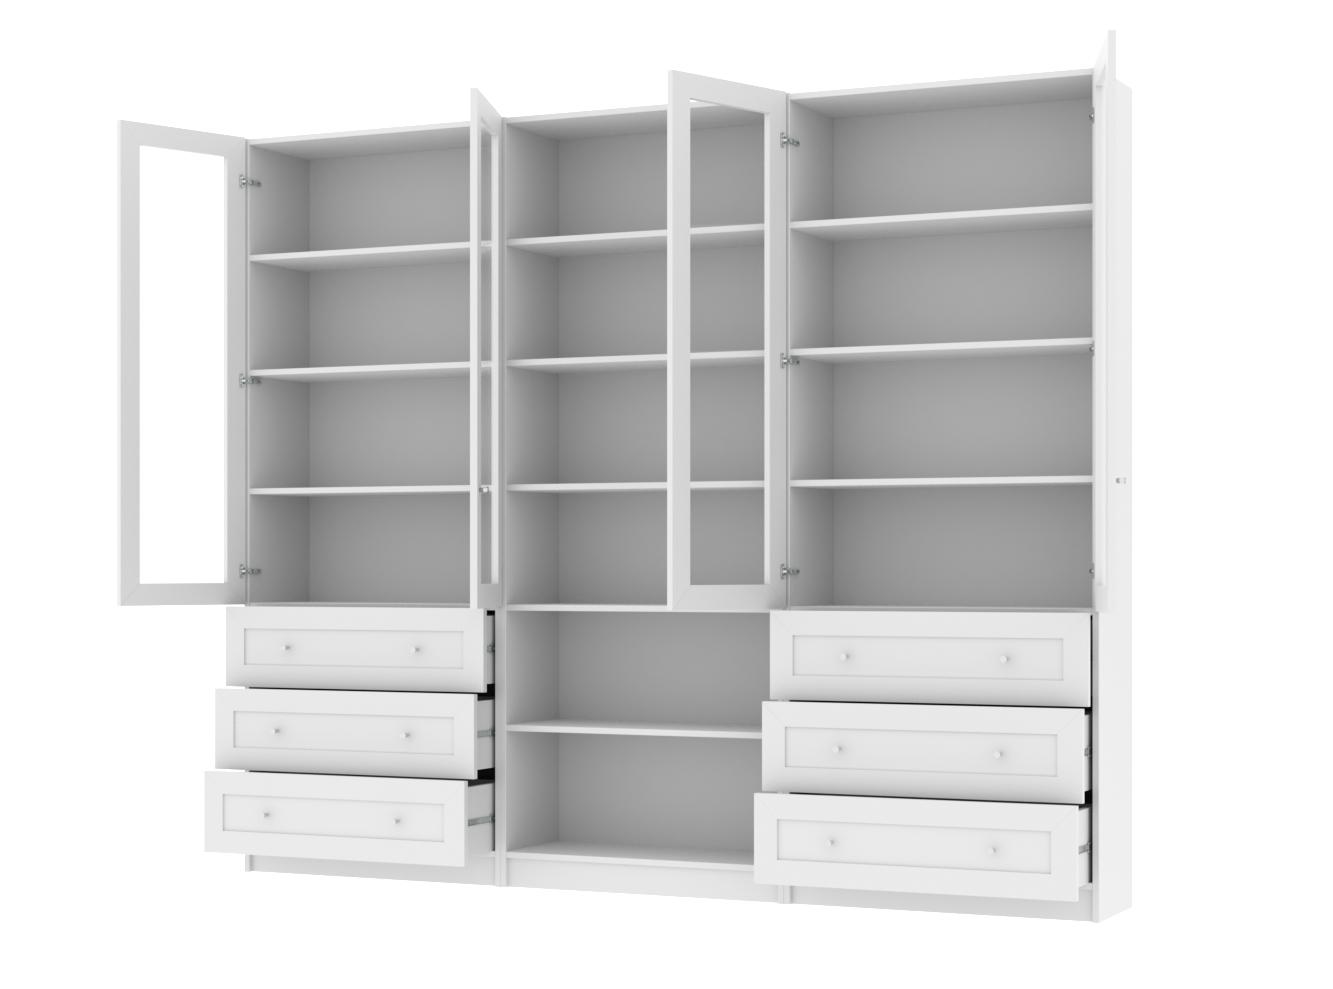  Книжный шкаф Билли 369 white ИКЕА (IKEA) изображение товара